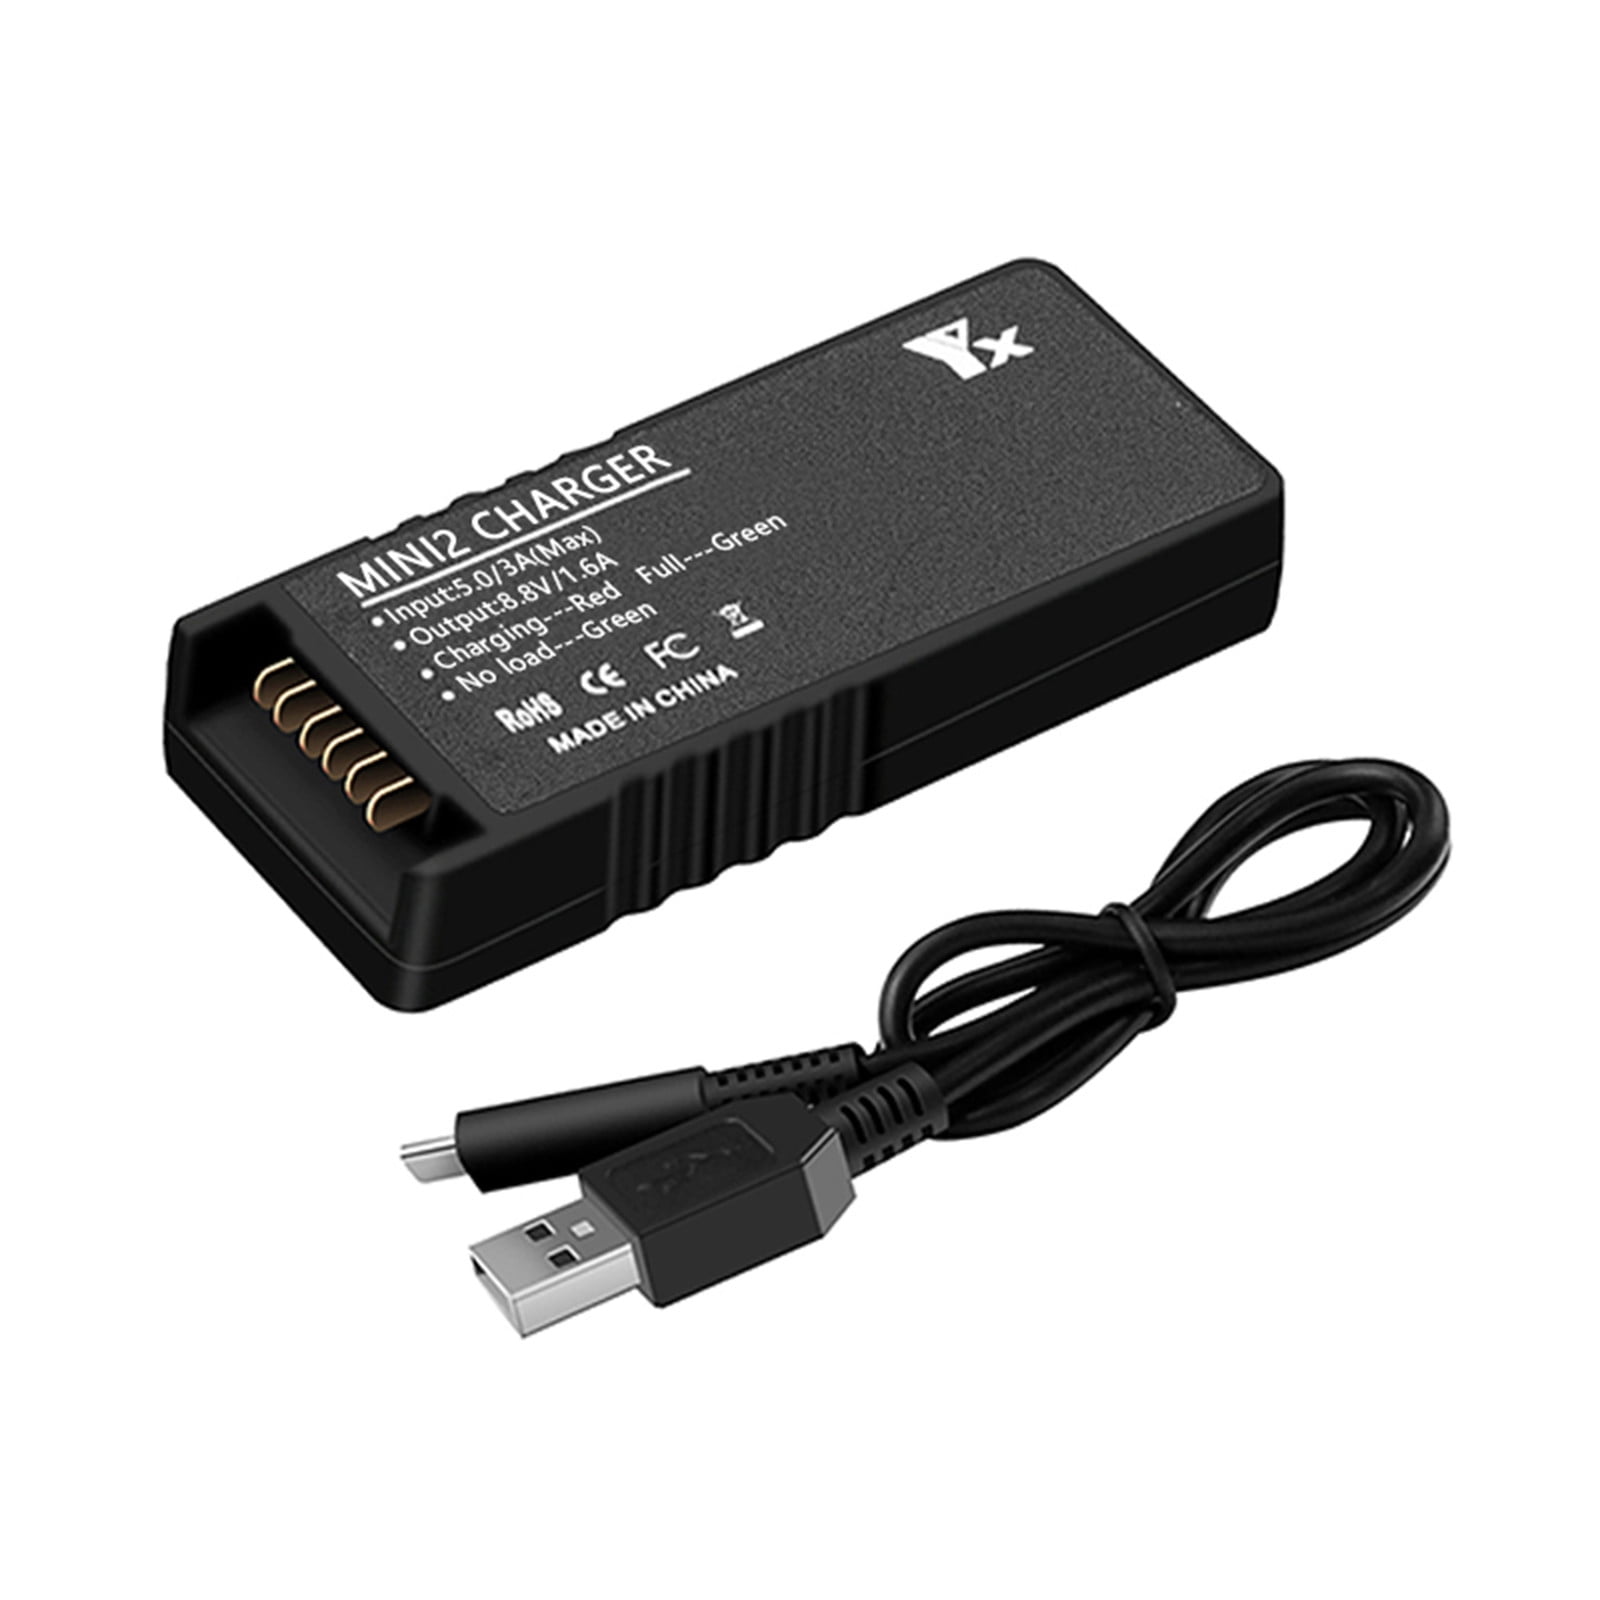 jiumoji Battery Wall Charger Adapter Type-c USB Hub RC Intelligent Quick Charging Compatible with DJI Mavic Mini Drone 